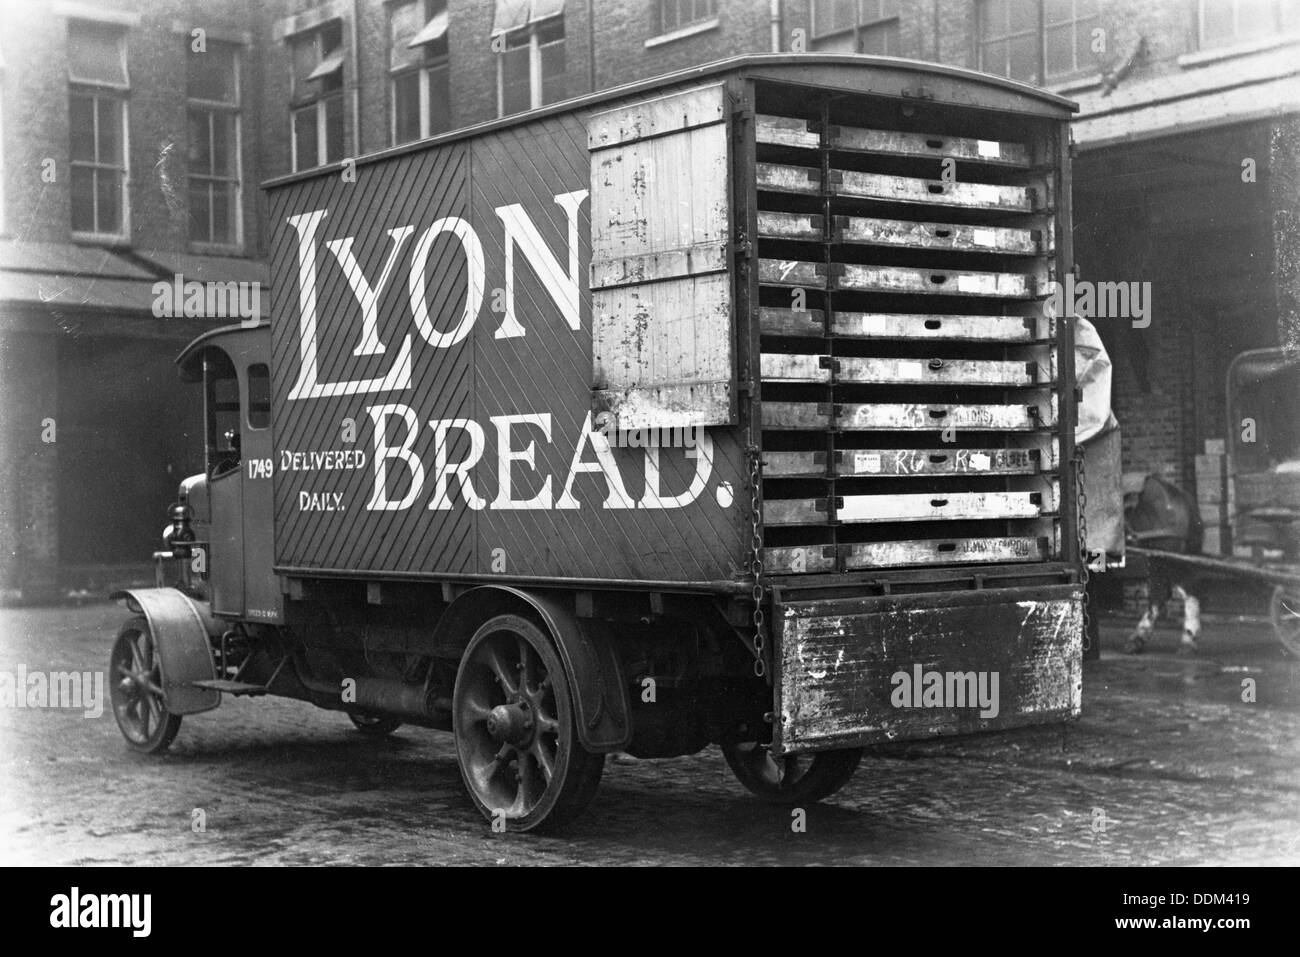 Lione consegna pane van. Artista: sconosciuto Foto Stock